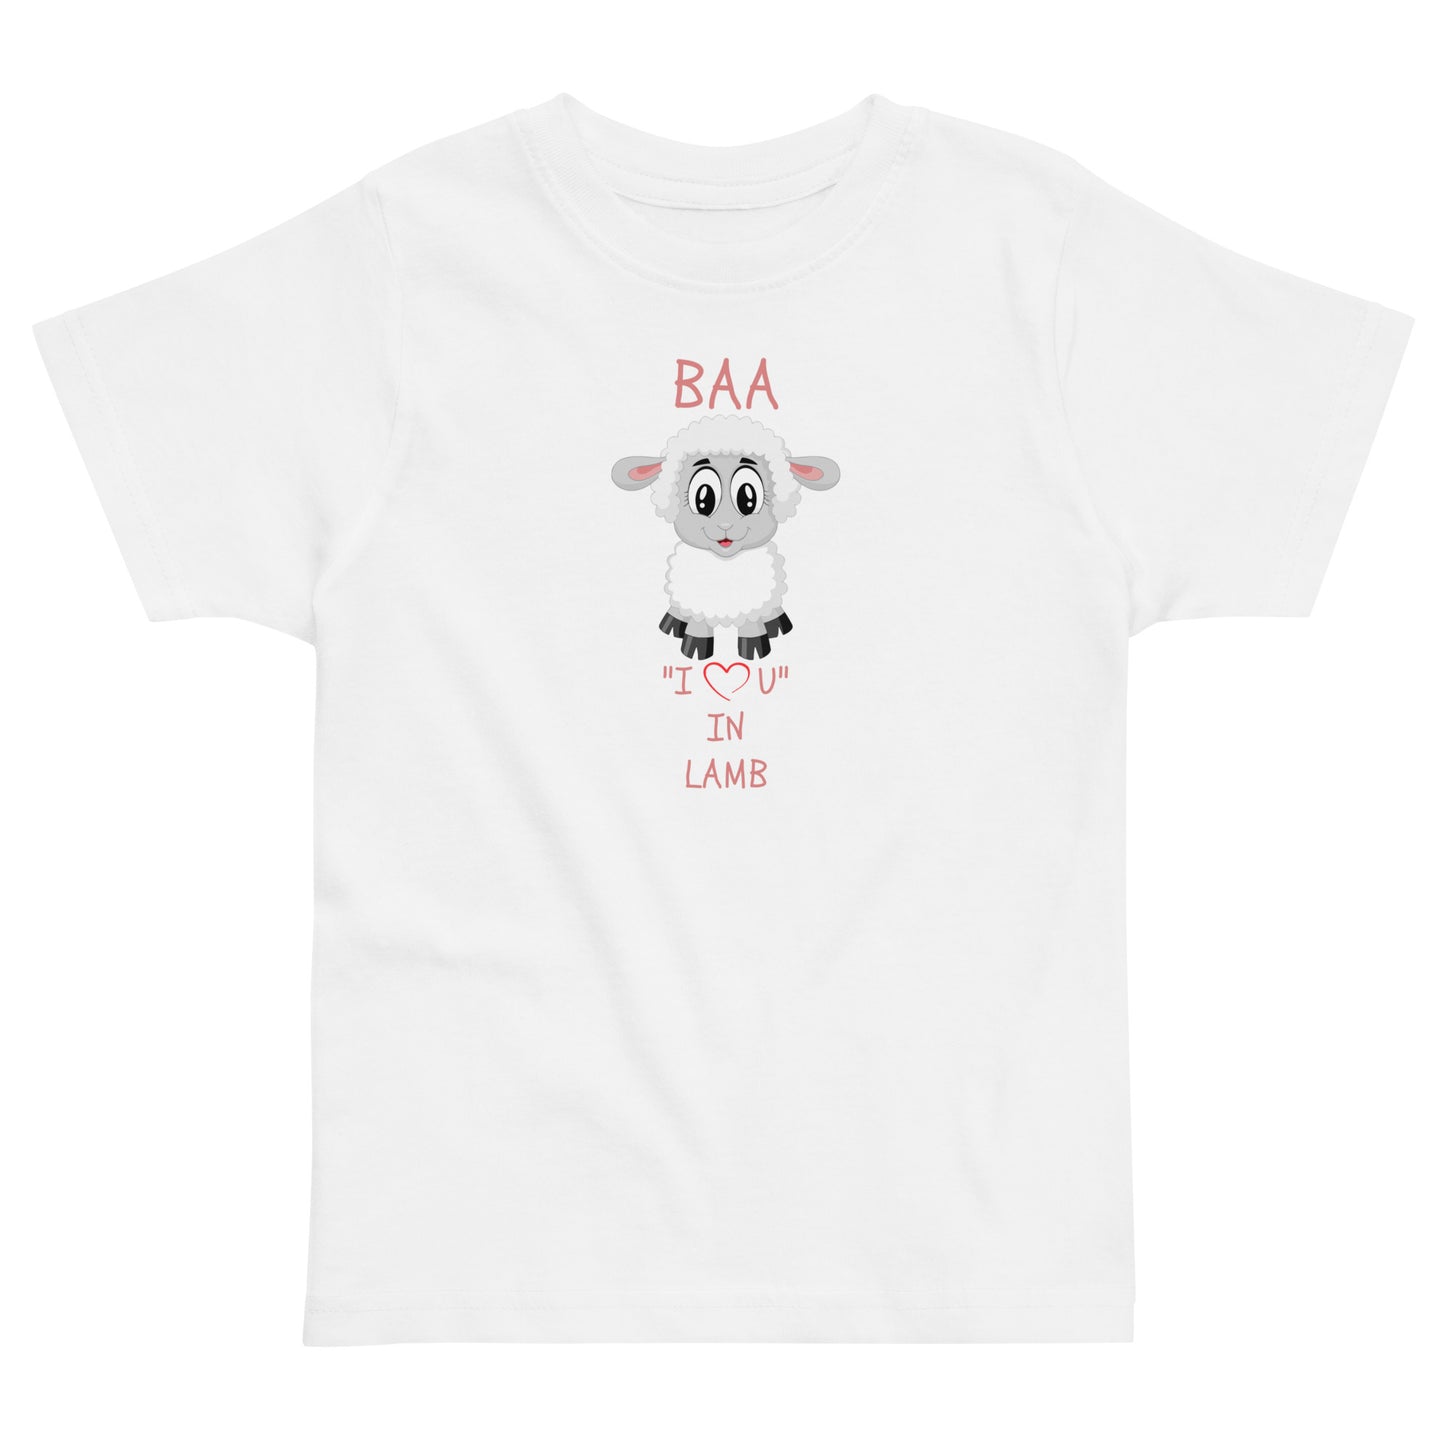 BAA "I LOVE U" IN LAMB  Toddler jersey t-shirt